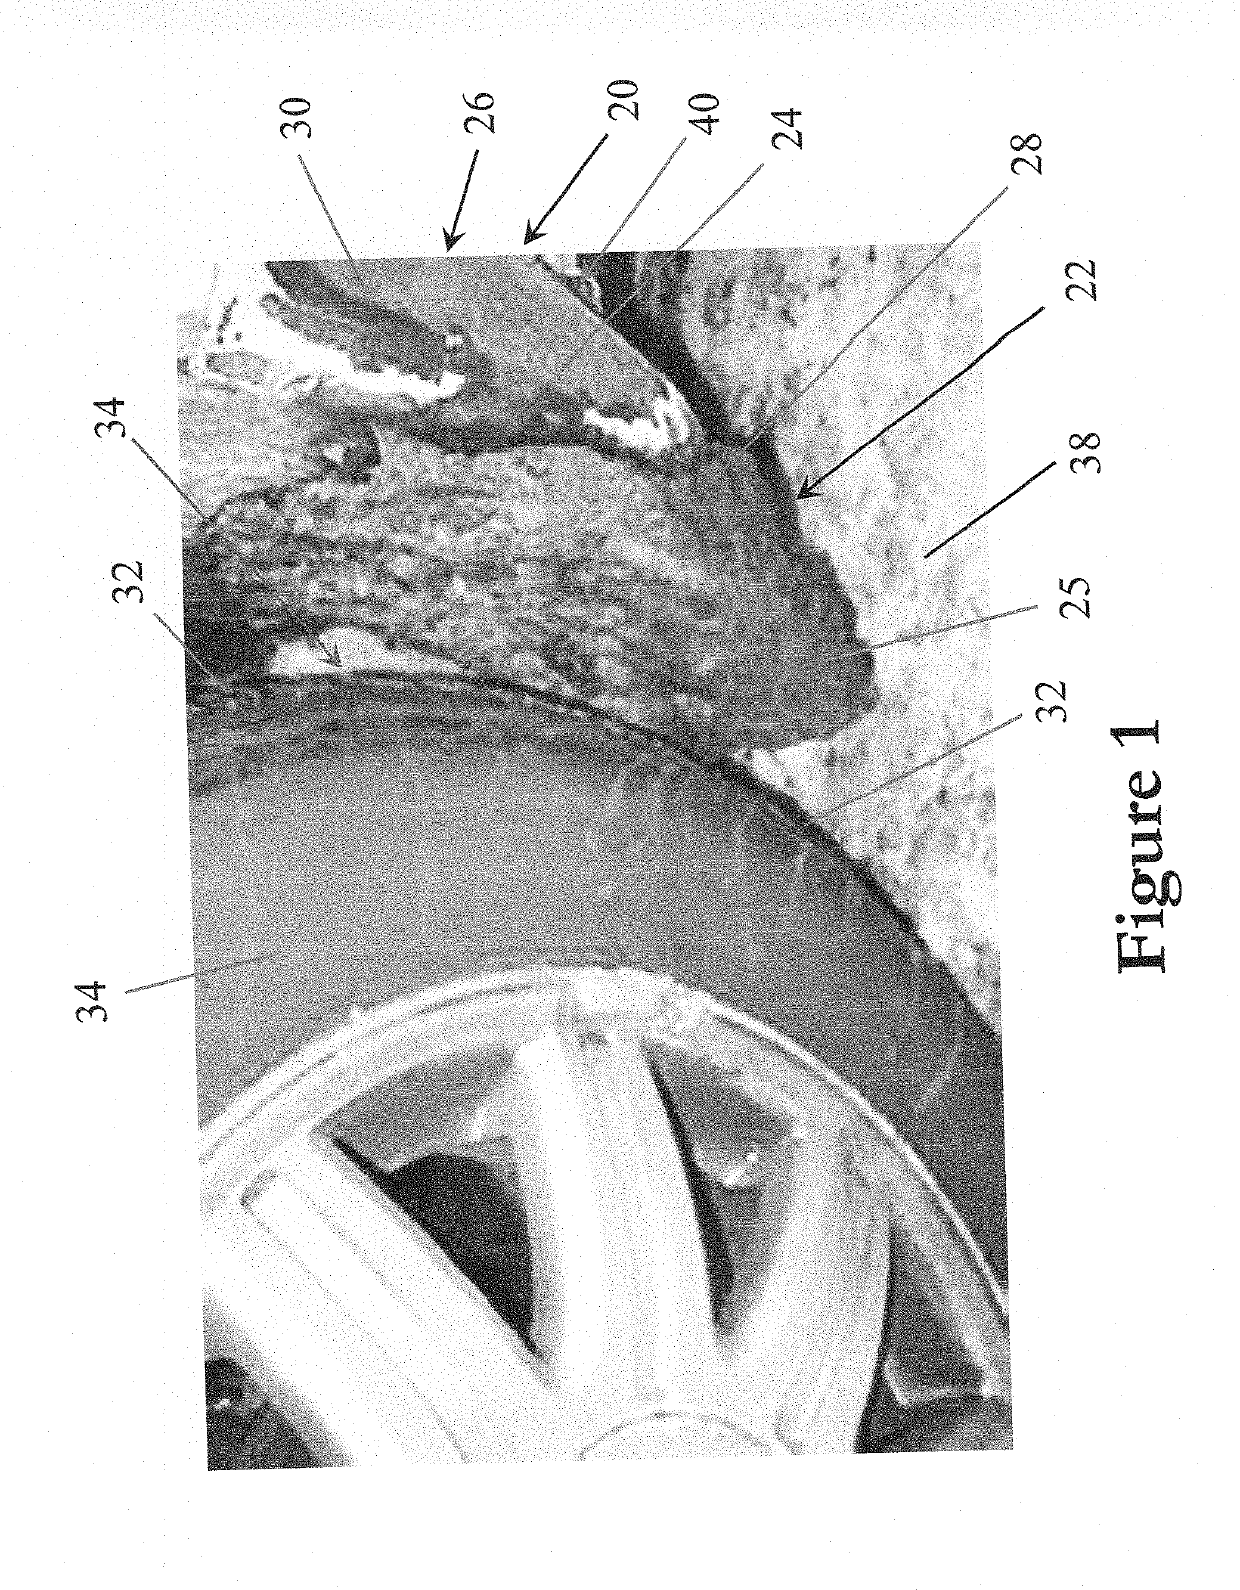 System for Defrosting and Shedding Moisture or Debris from Underside of Vehicle